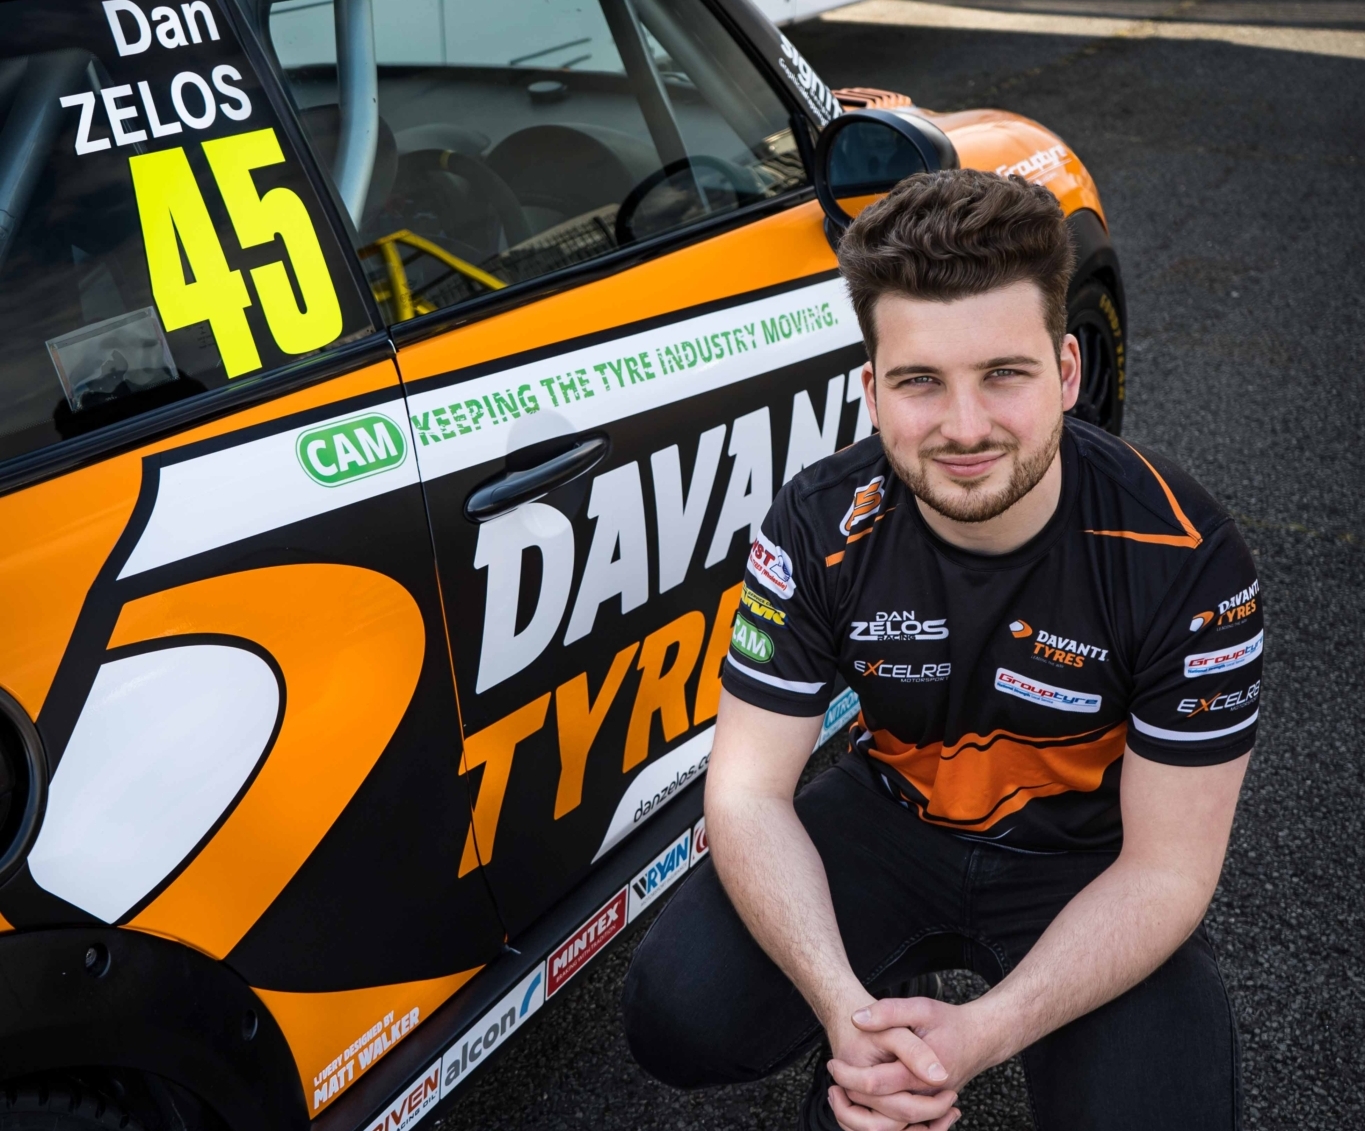 Cam continues support of UK racing prospect Dan Zelos - Tyrepress